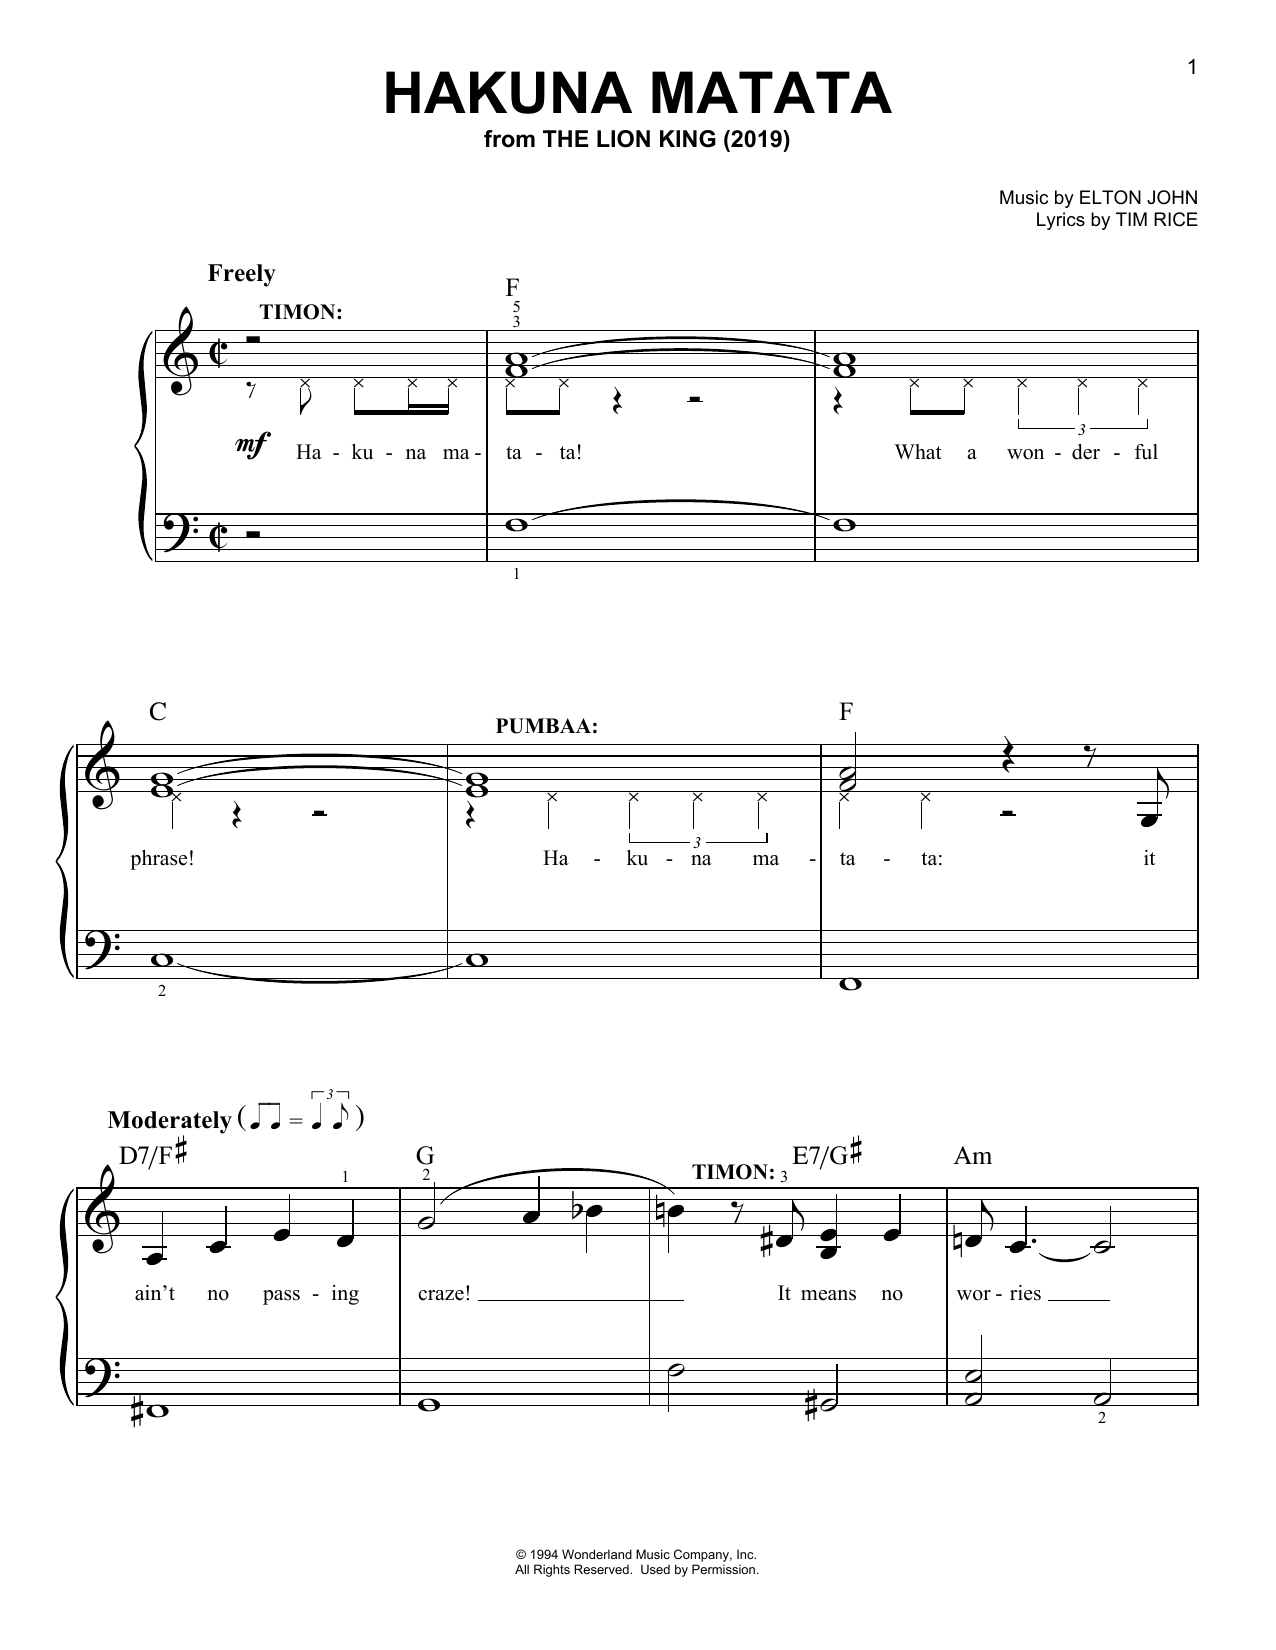 Elton John Hakuna Matata (from The Lion King 2019) Sheet Music Notes & Chords for Ukulele - Download or Print PDF